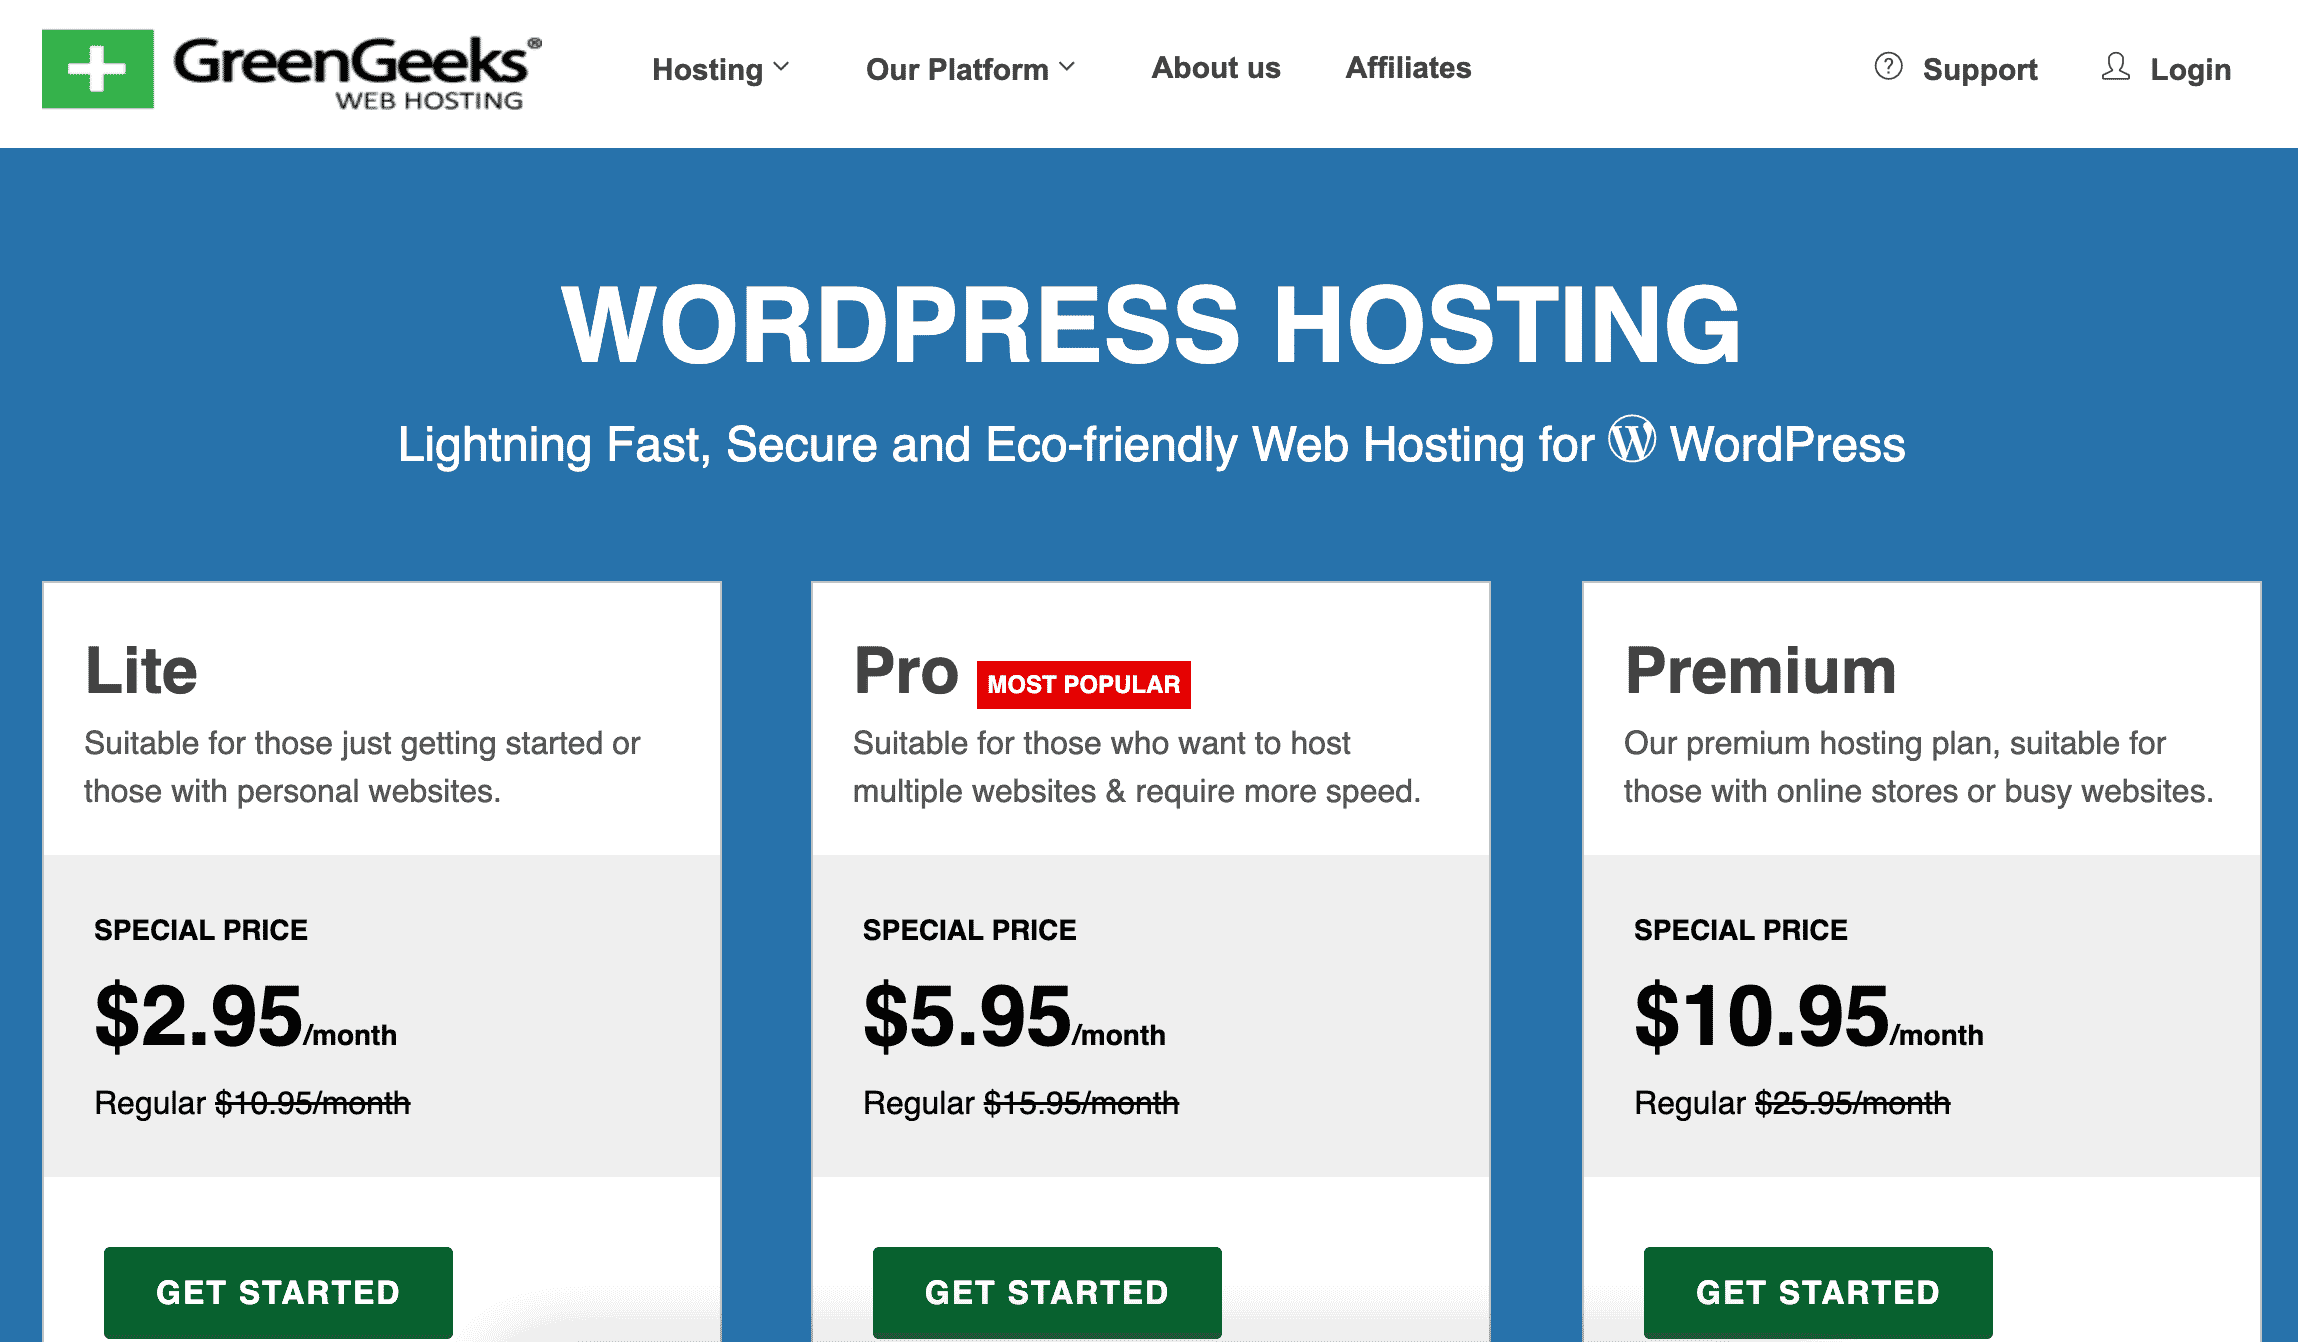 GreenGeeks cheapest WordPress hosting